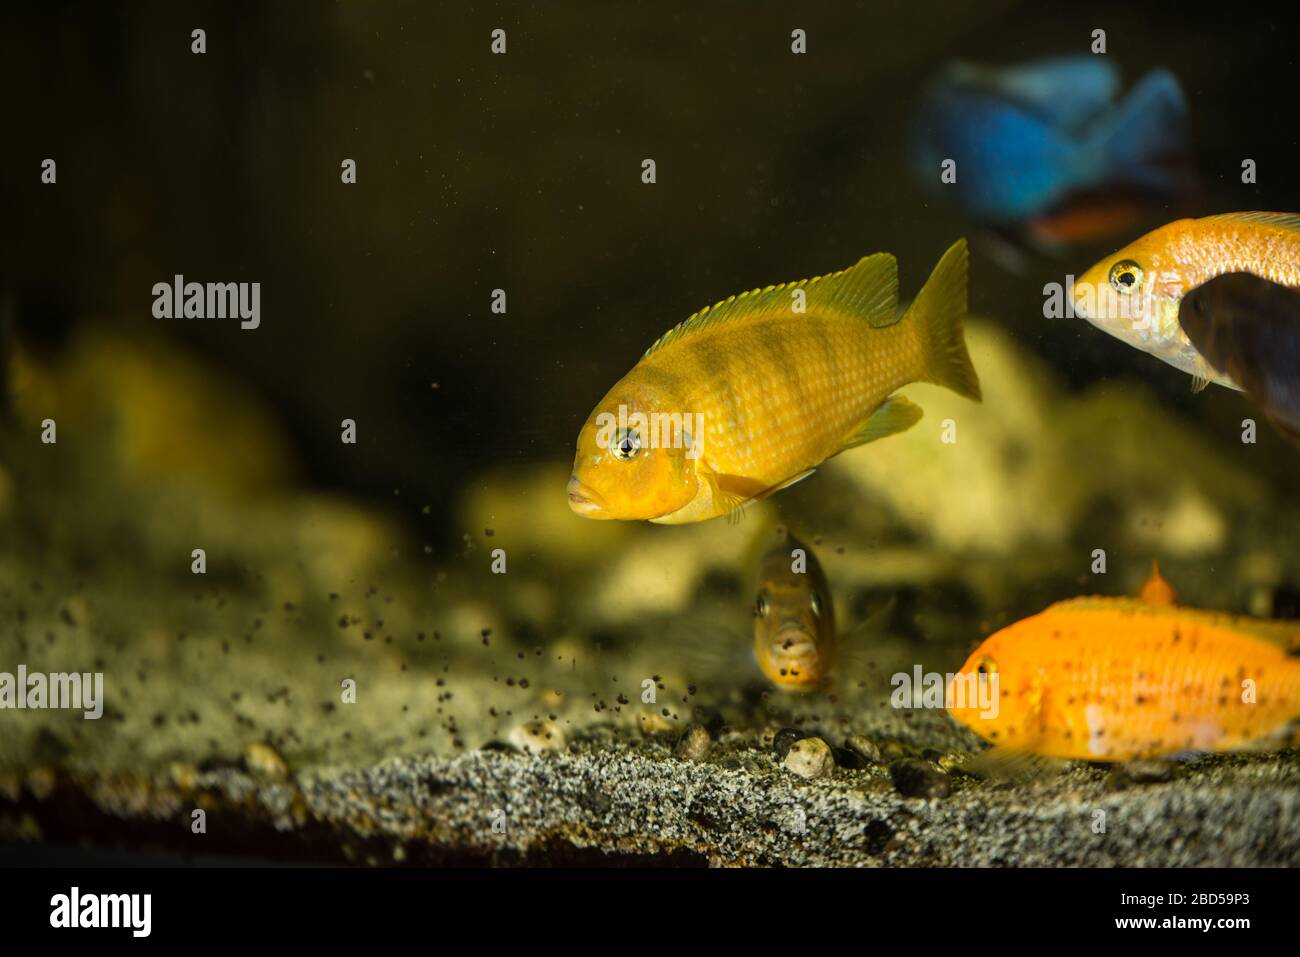 Lombardoi malawi cichlid swimming in aquarium Stock Photo